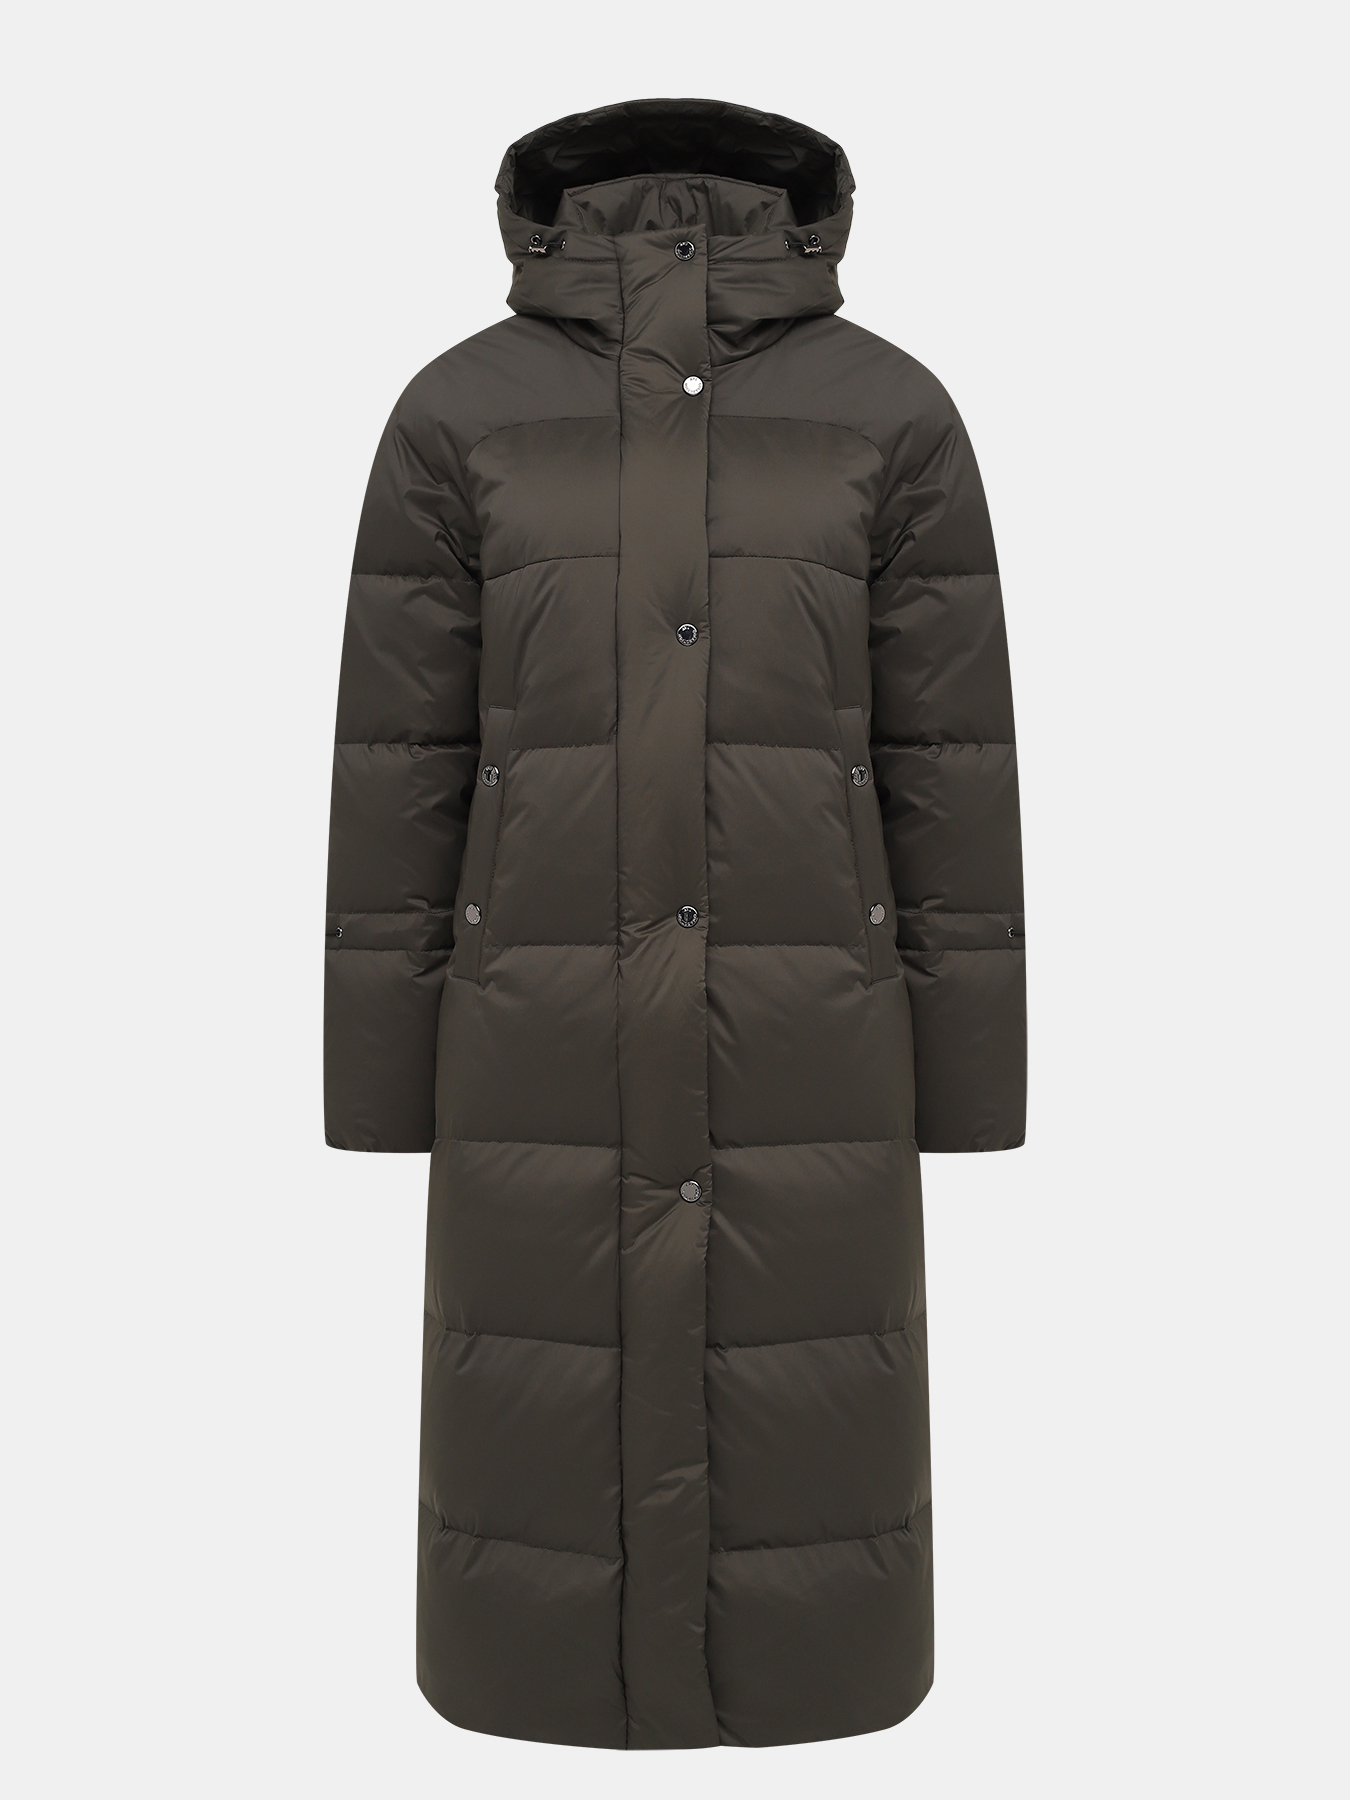 Пальто зимнее AVI 433638-023, цвет хаки, размер 50 - фото 1